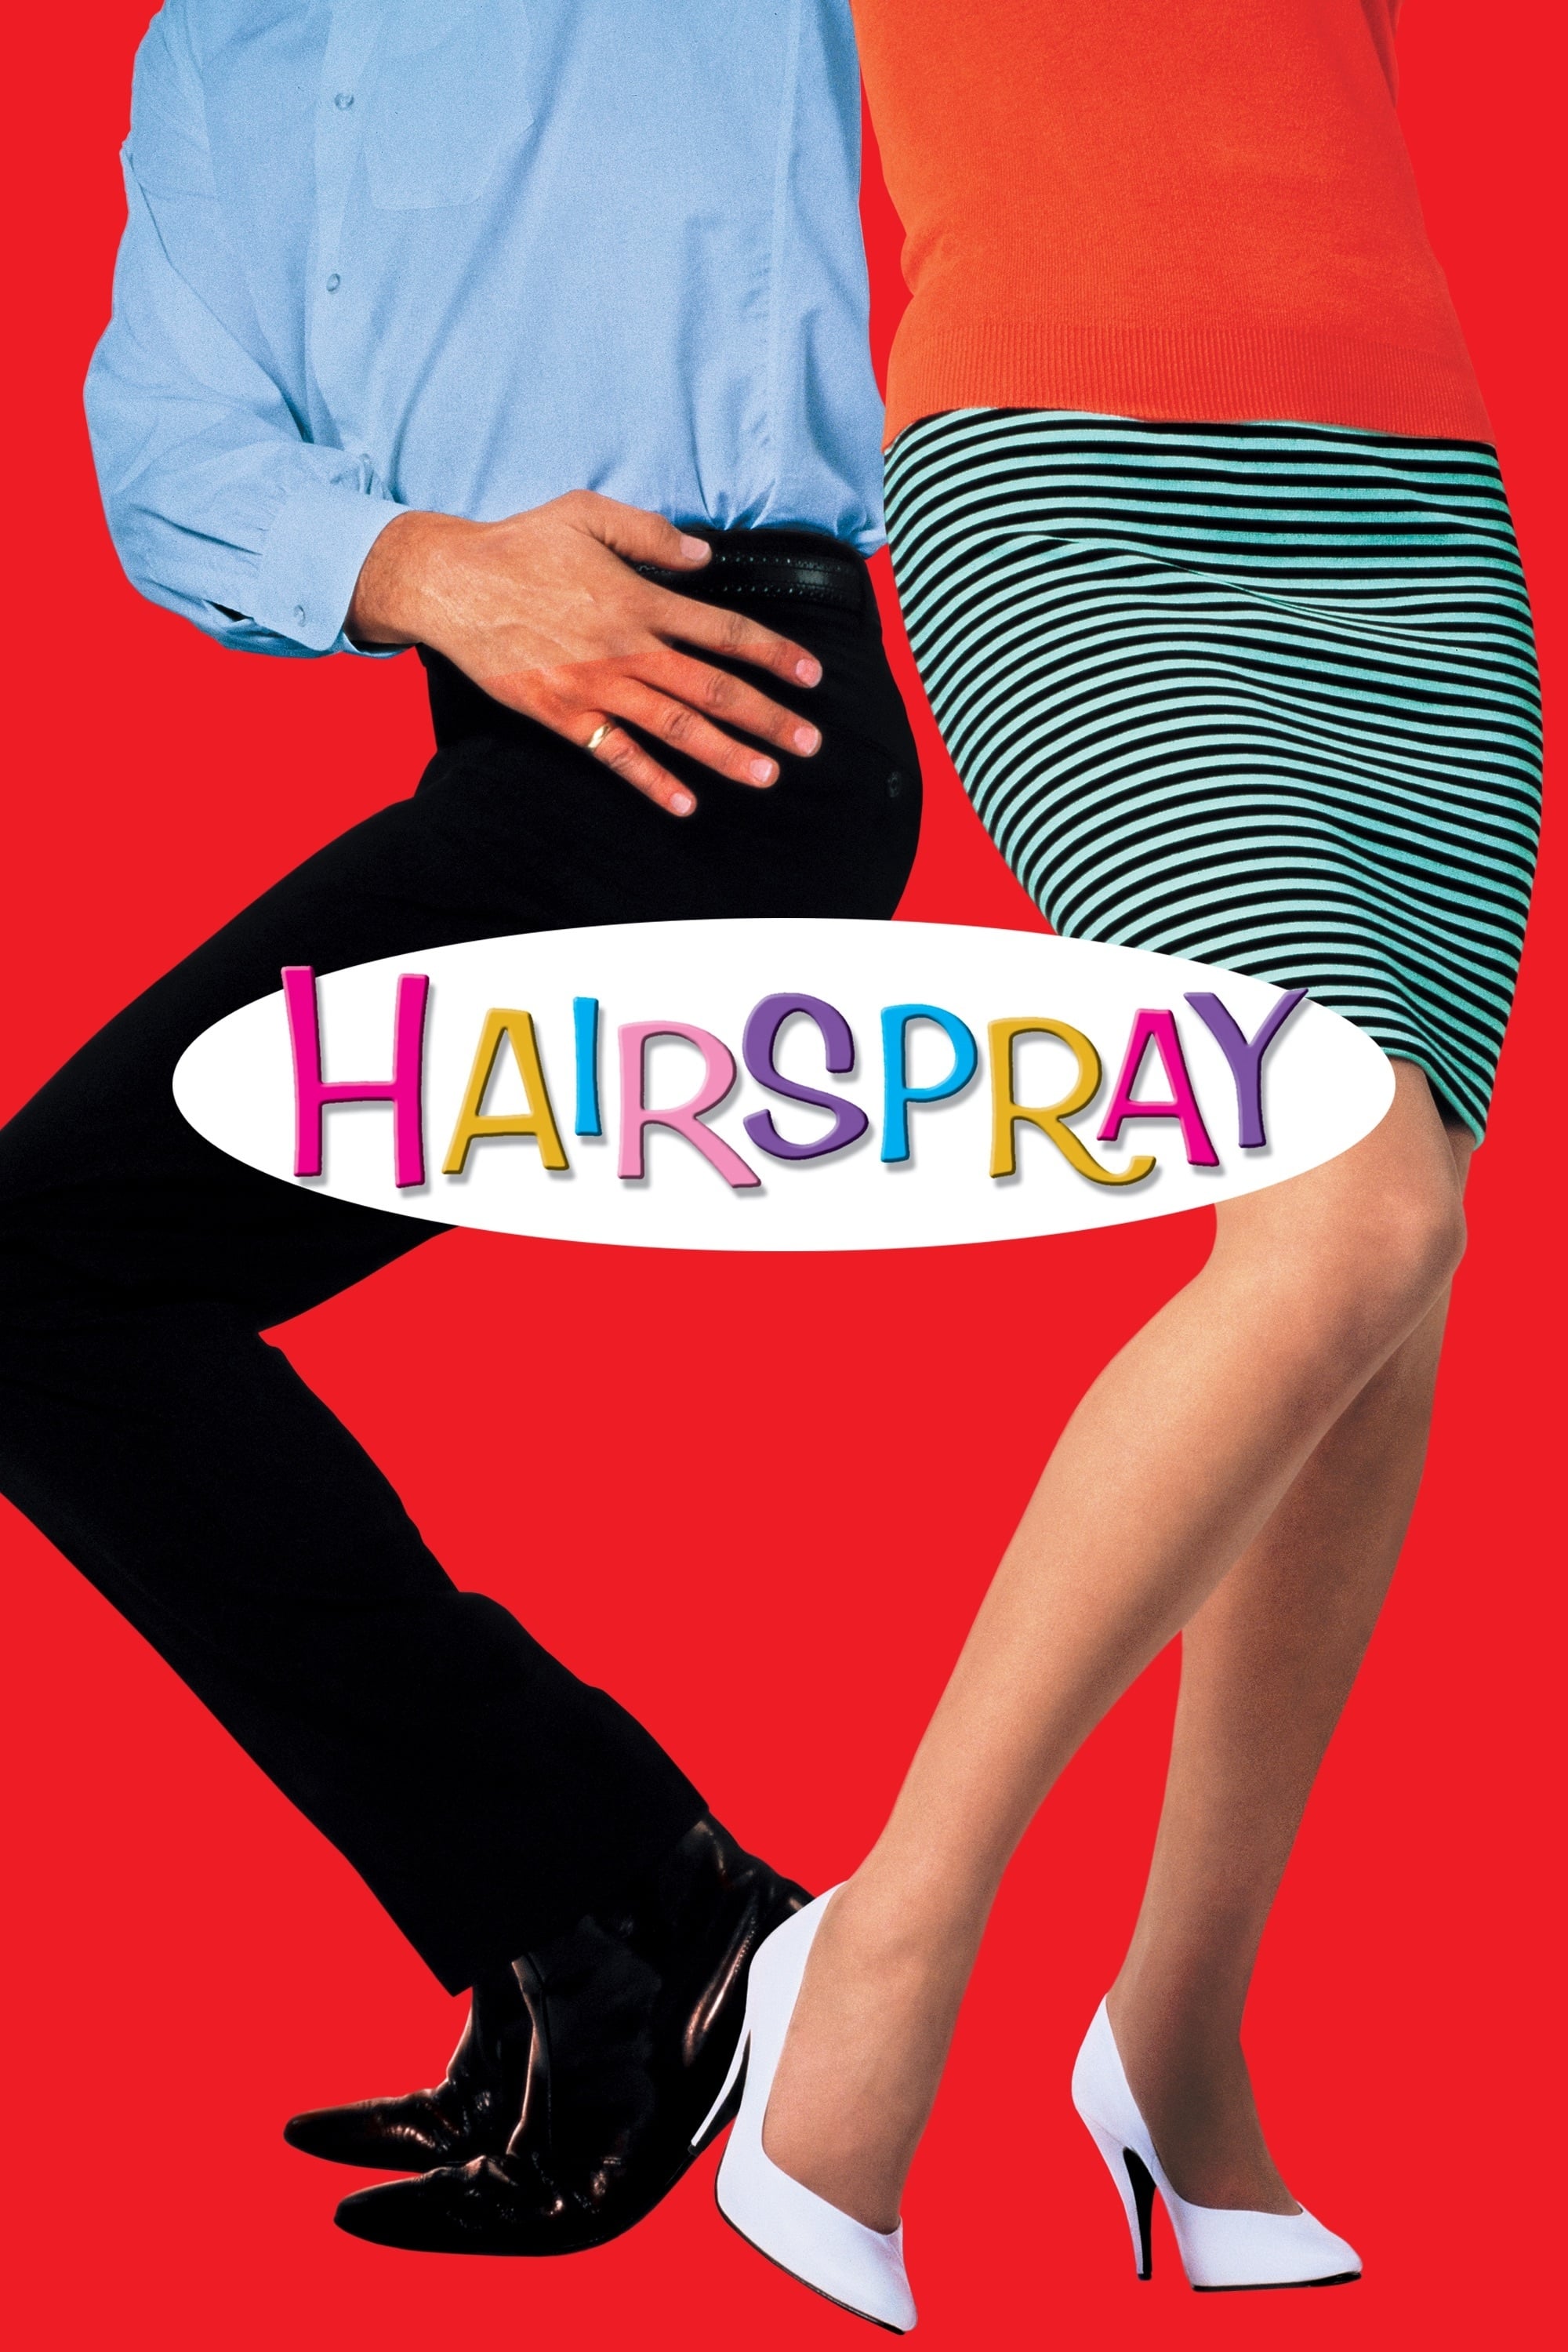 Hairspray 1988 Movie Poster